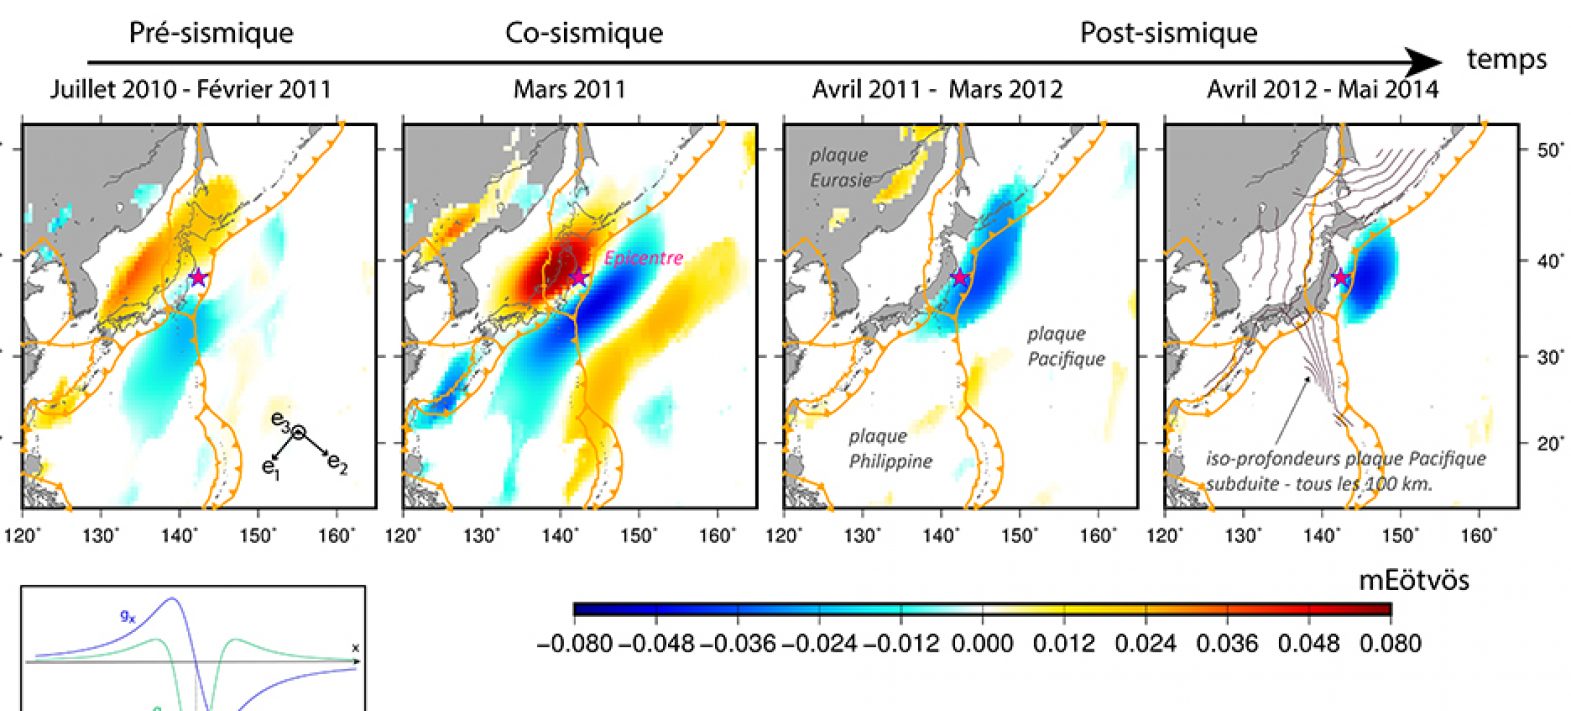 Gravimetric satellite data highlight deep deformations prior to the 2011 Tohoku earthquake